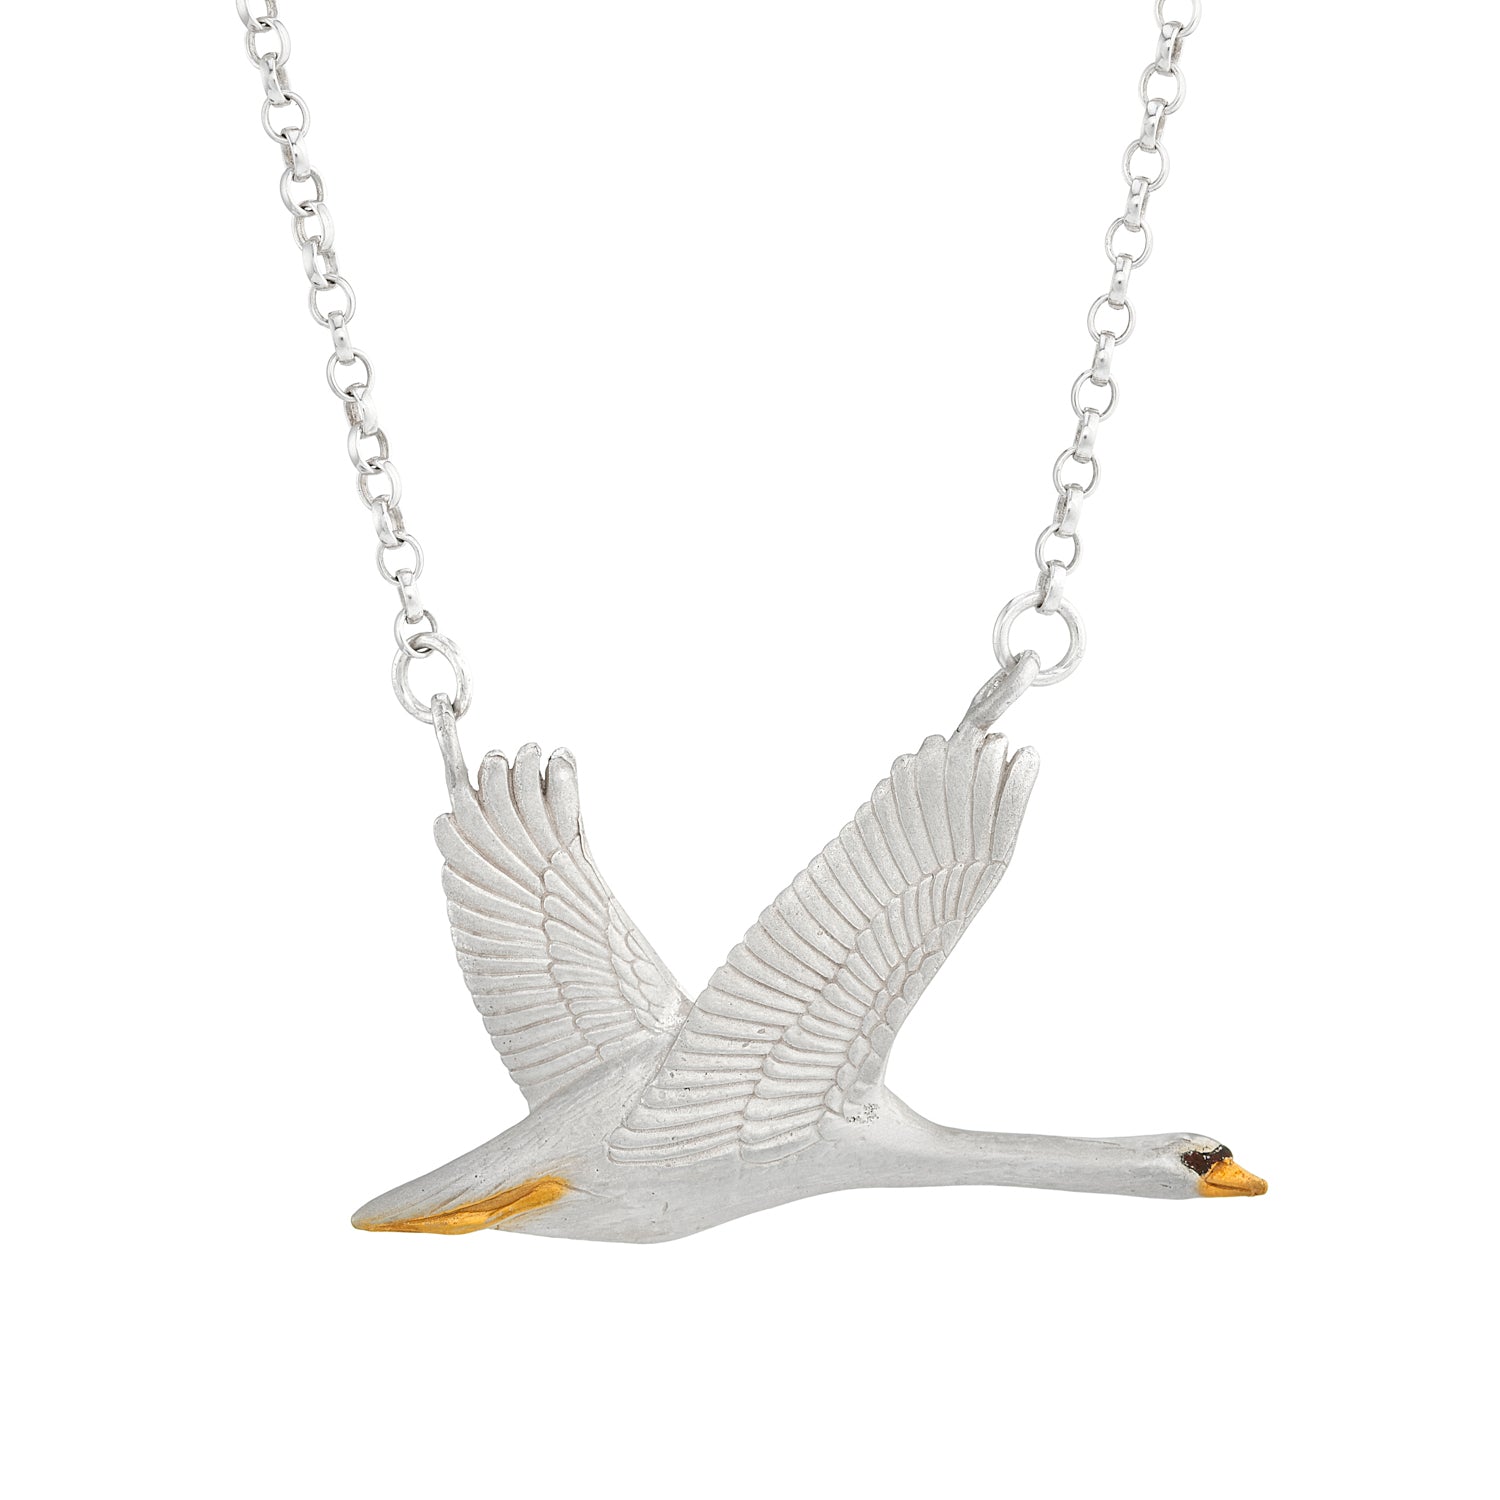 Swan in flight necklace